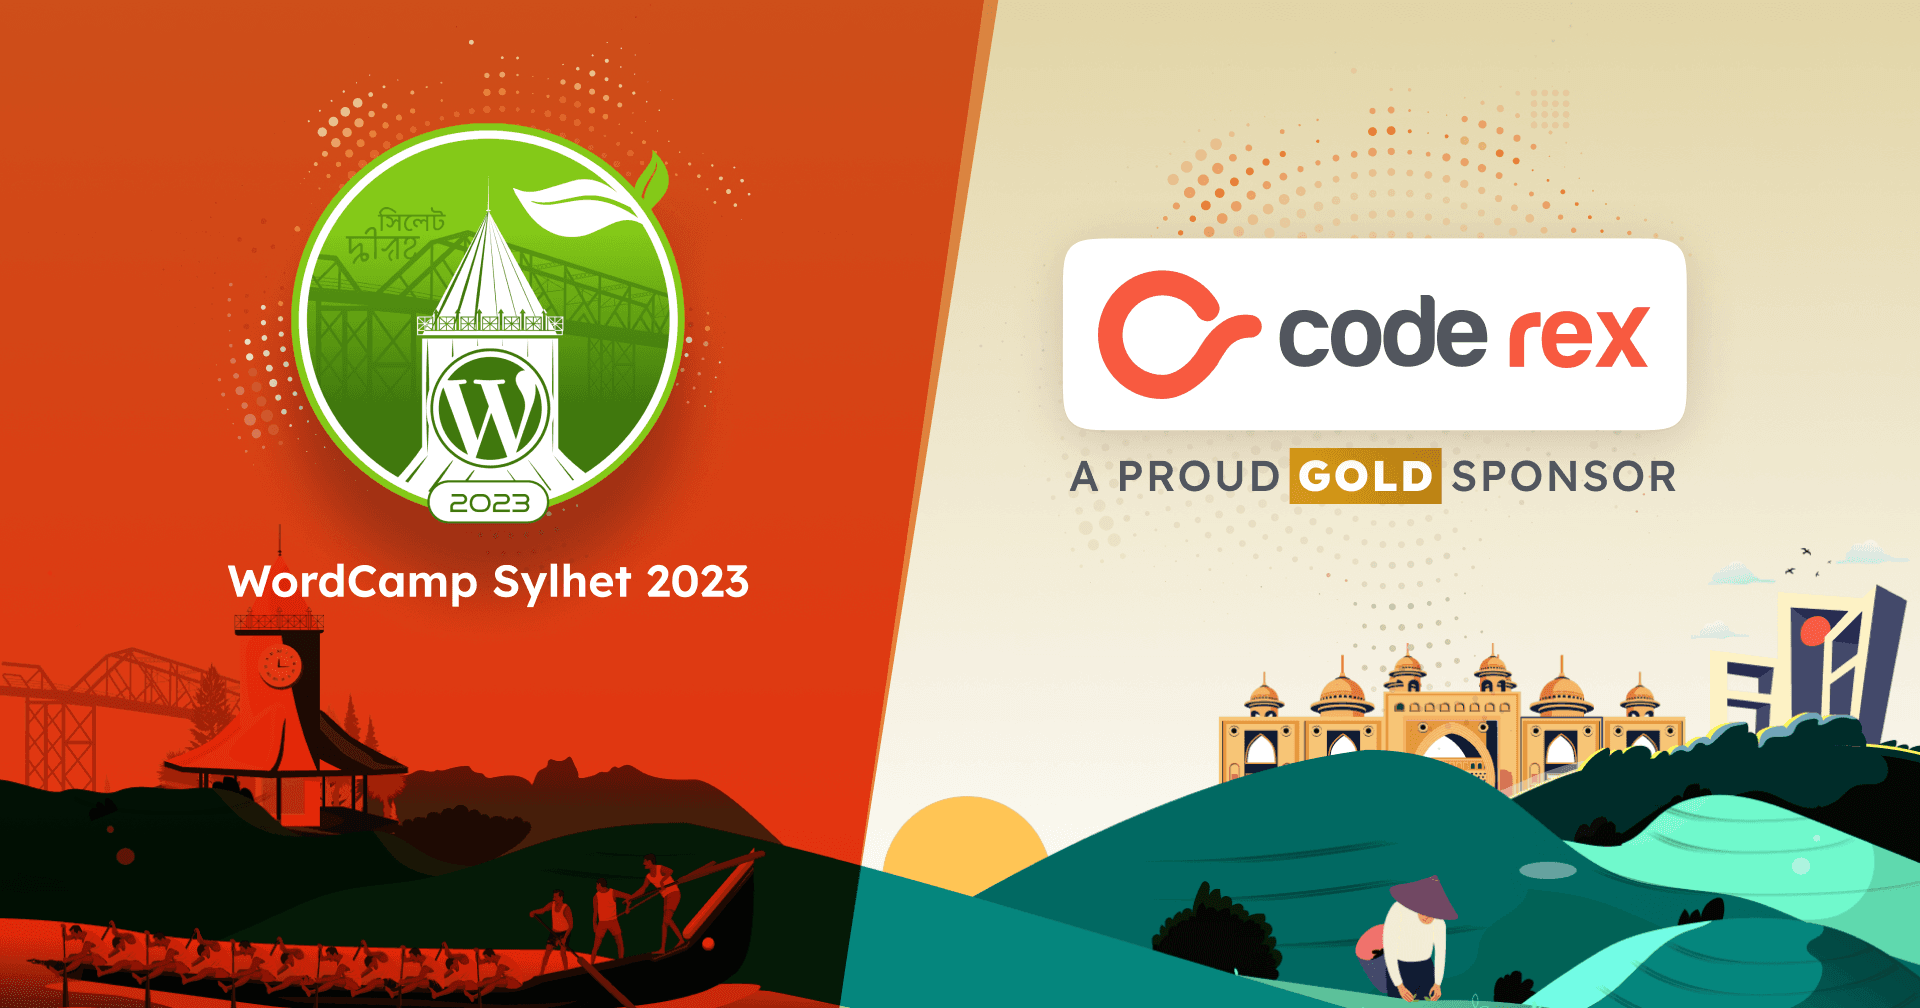 WordCamp Sylhet 2023 – Code Rex Is A Gold Sponsor